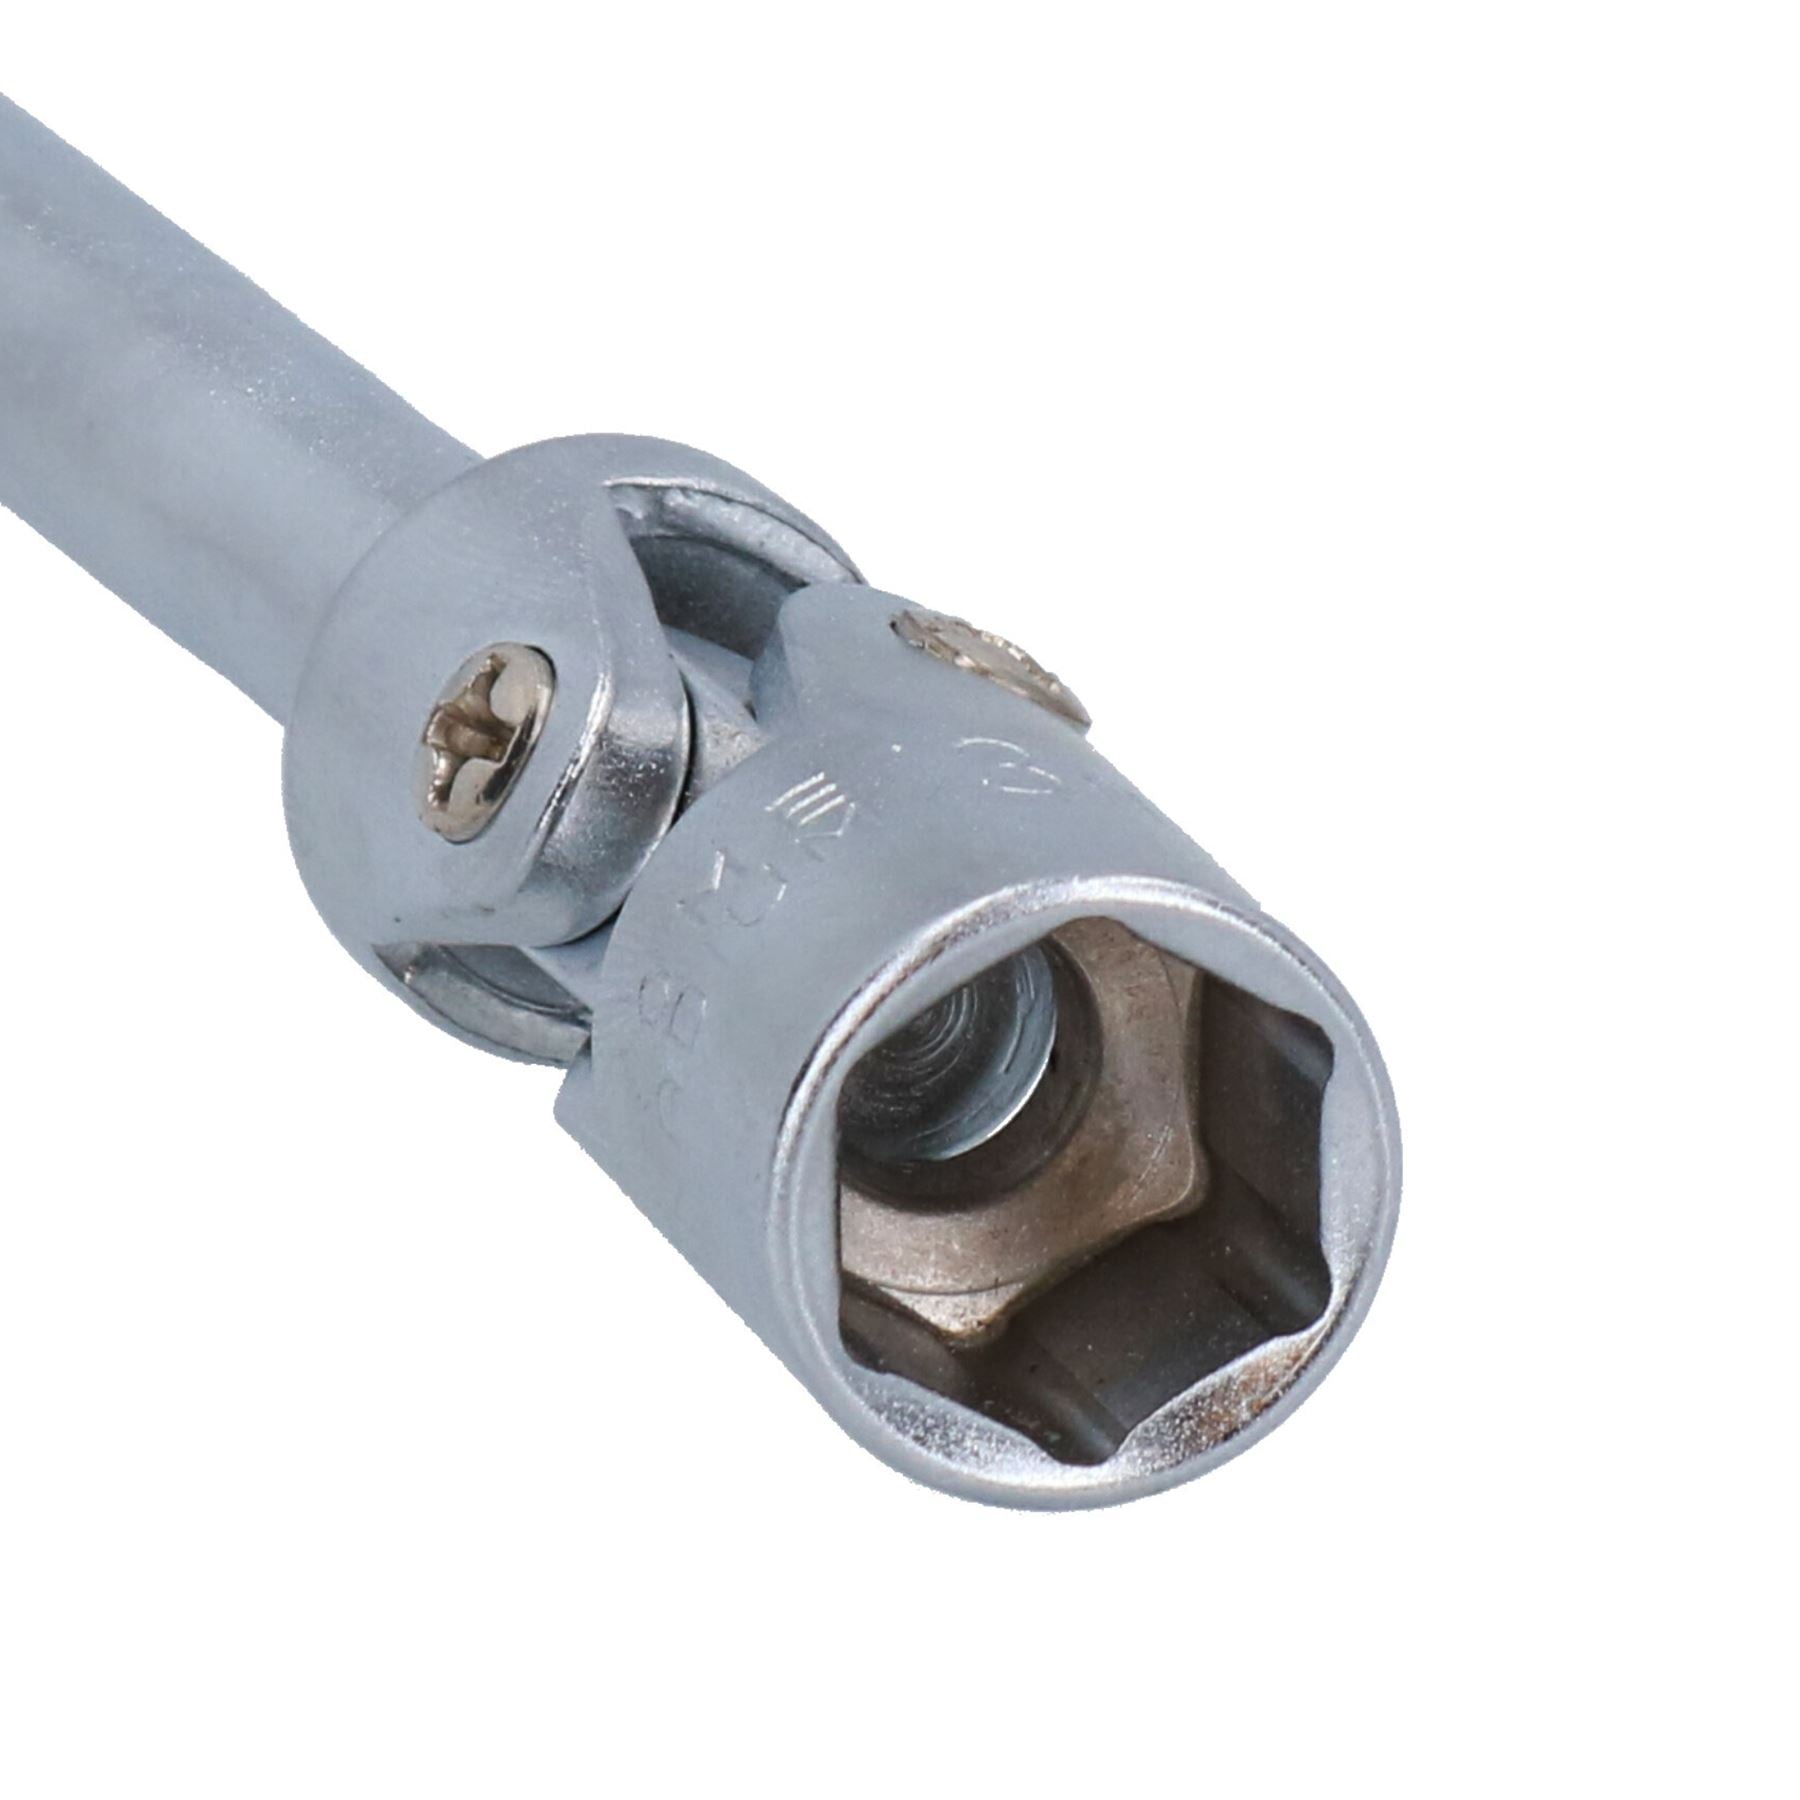 13mm Metric UJ Universal Joint T Bar Sockets Spanner Nut Spinner Wrench